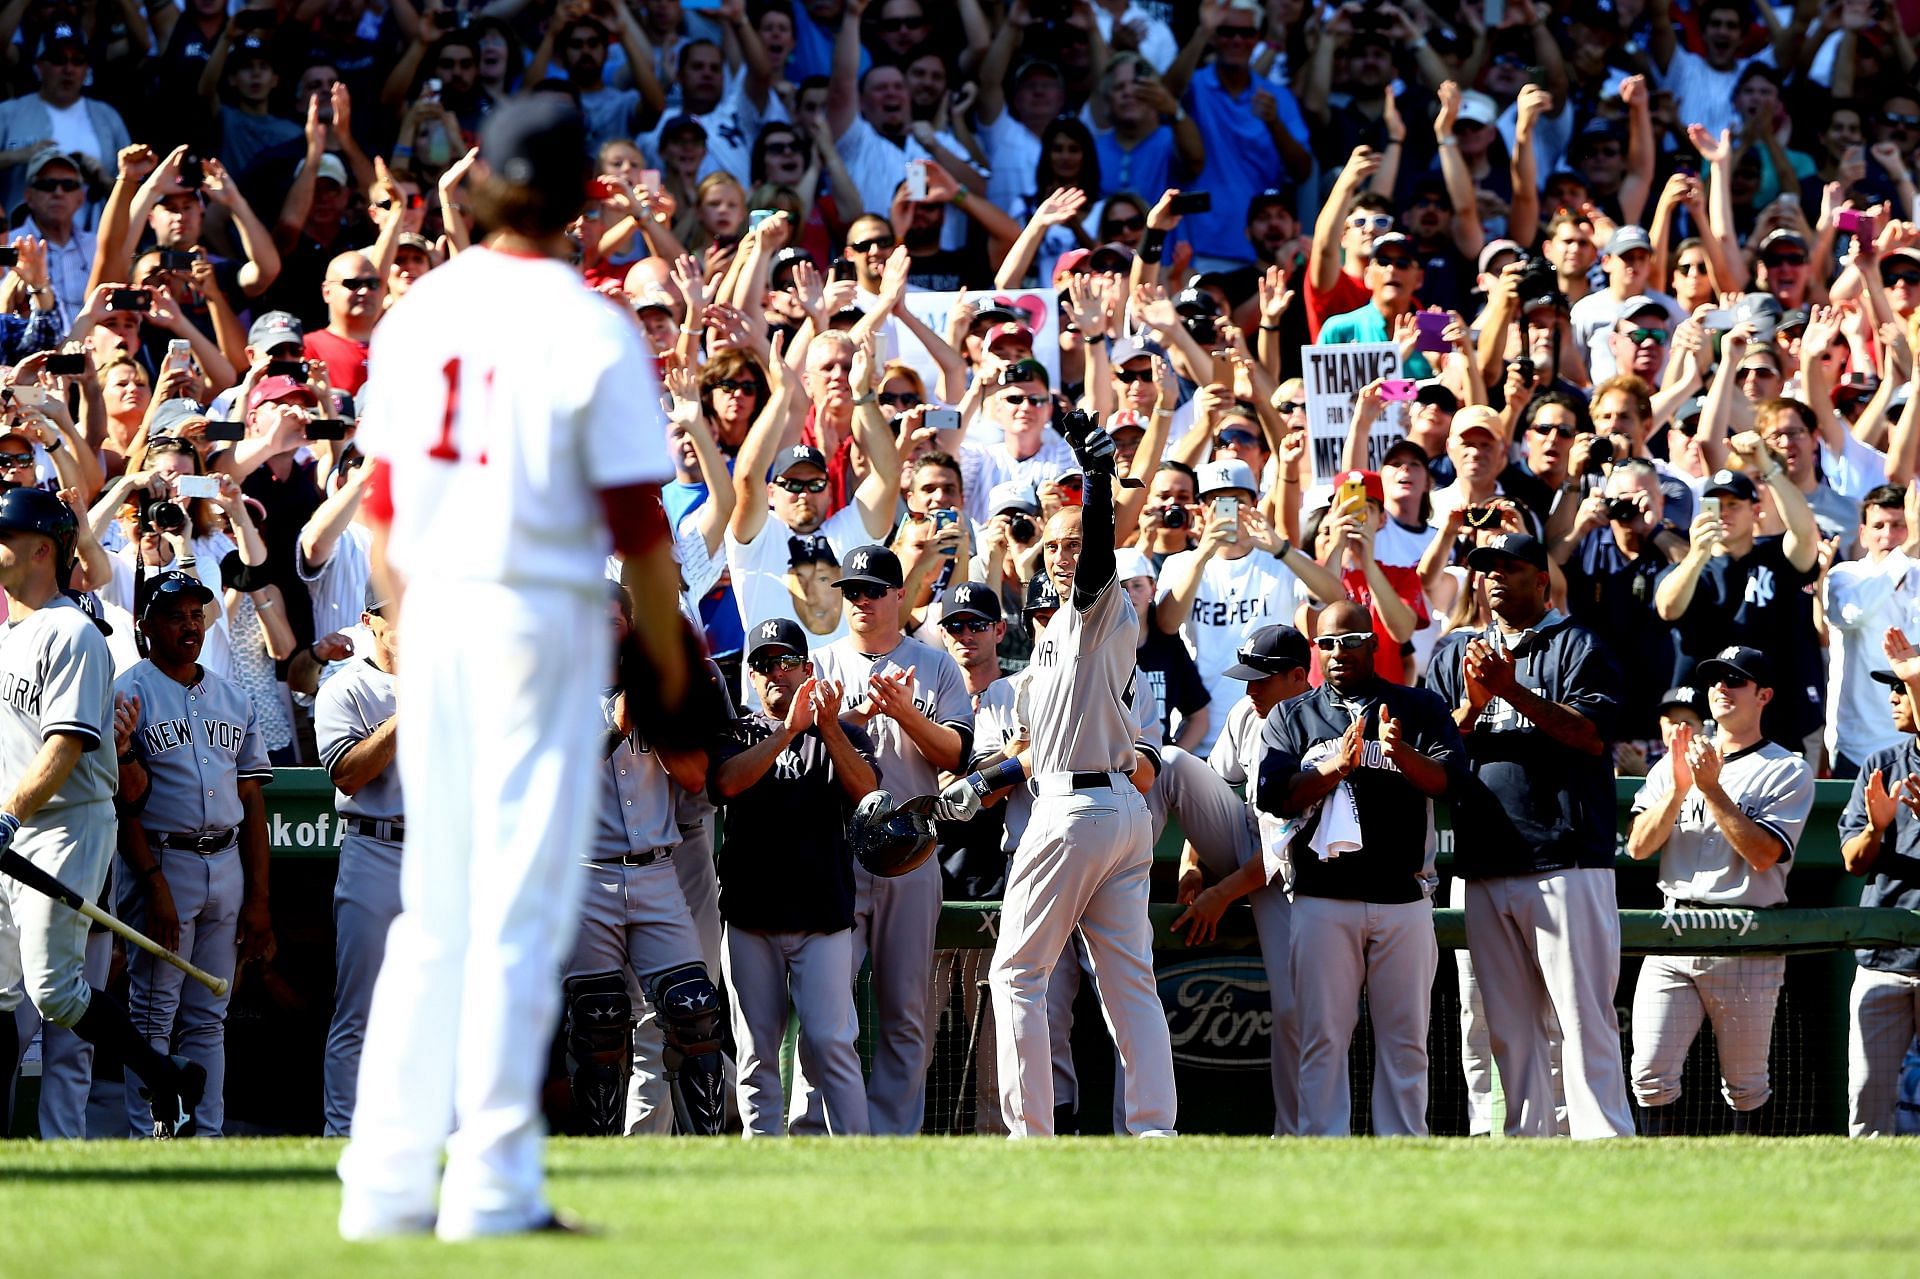 New York Yankees legend Derek Jeter applauded by the fans at Fenway Park